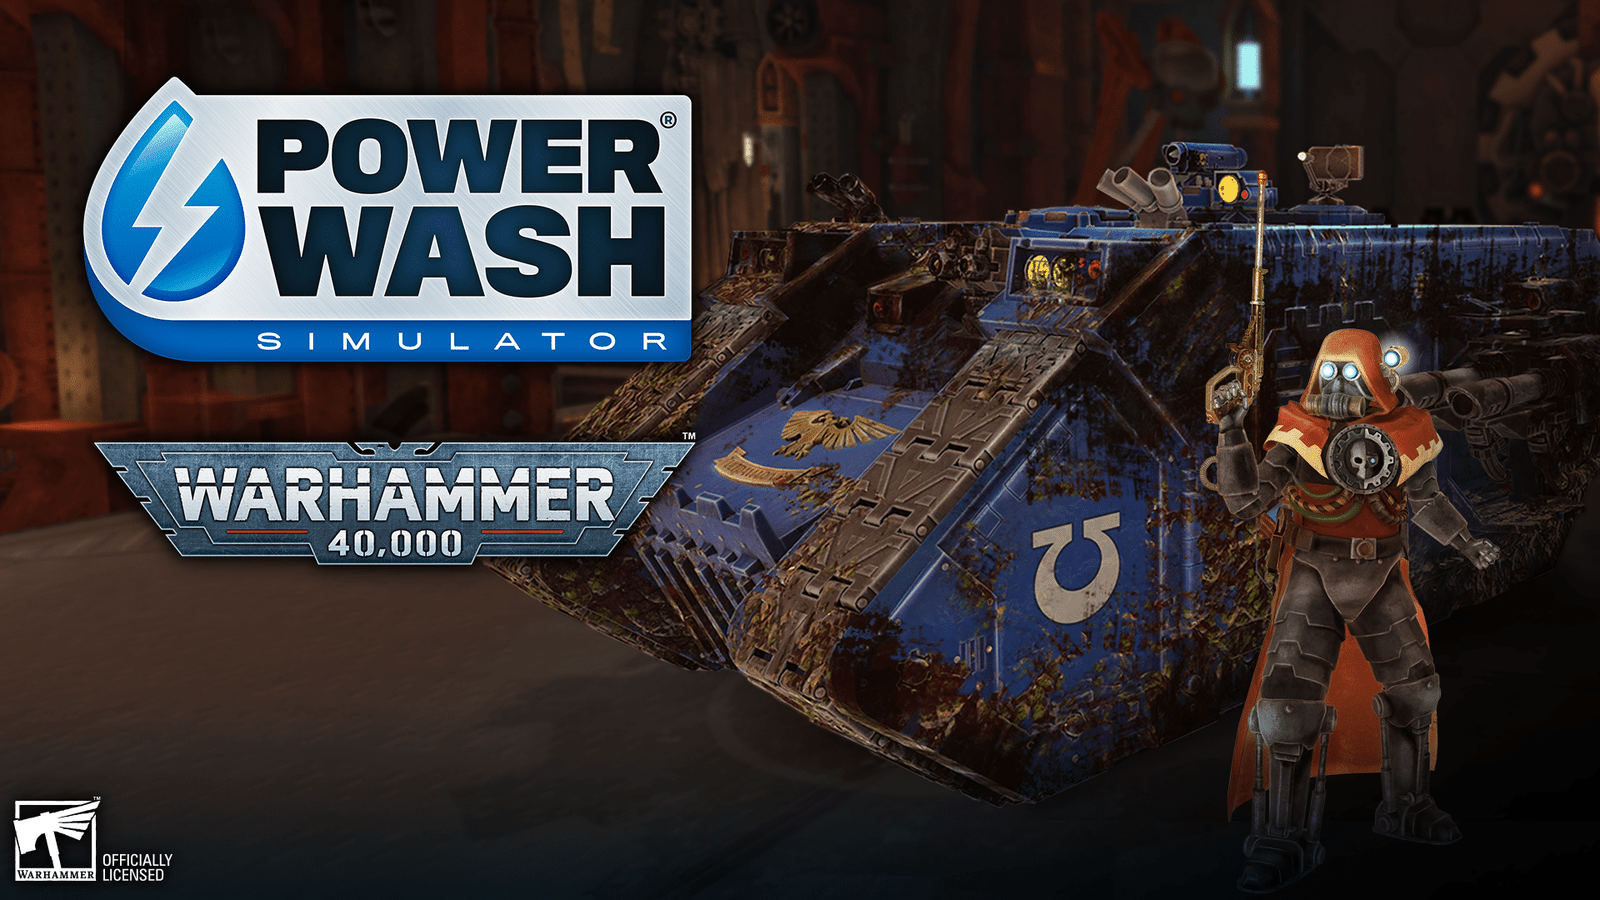 PowerWash Simulator : Warhammer 40,000 arrive en pack spécial dans le jeu